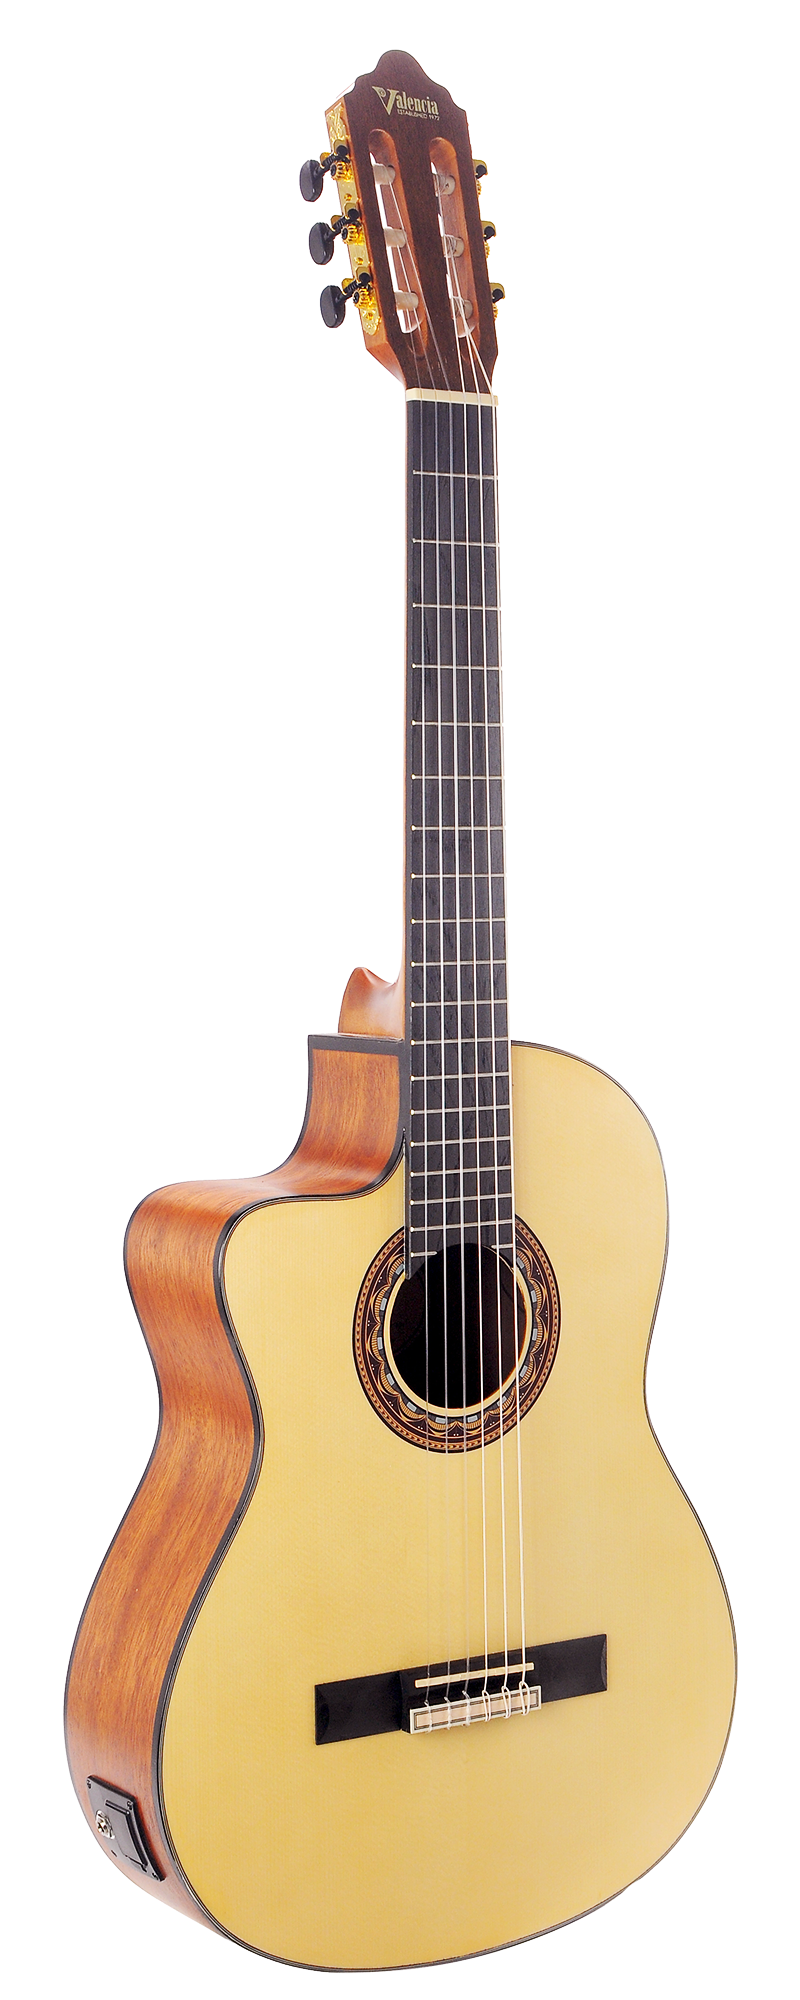 Valencia 300 Series Classical Electric Guitar w/ Cutaway (Assorted Orientation)